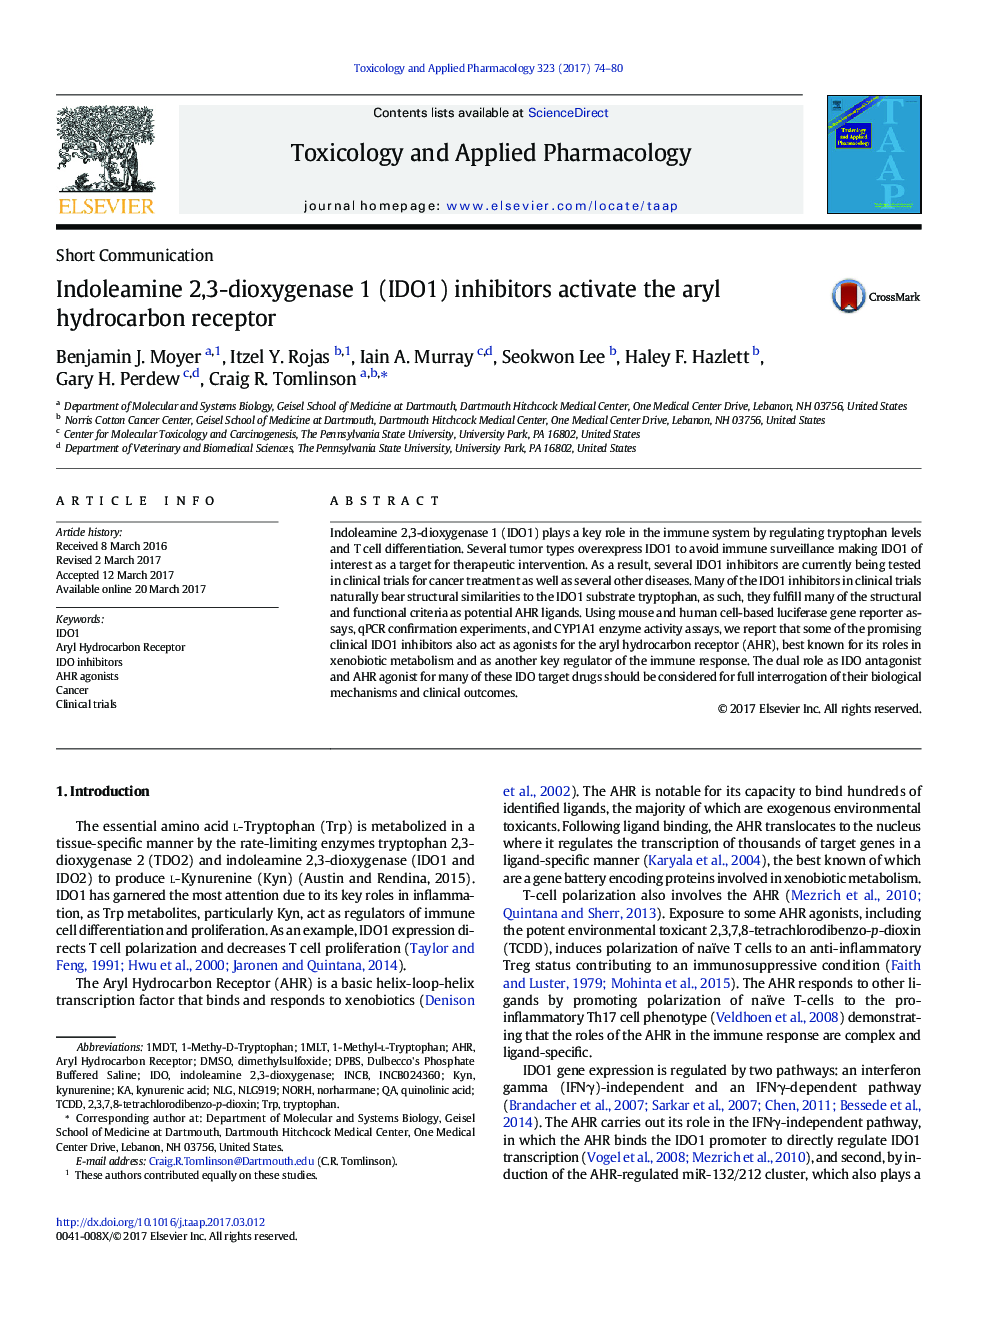 Indoleamine 2,3-dioxygenase 1 (IDO1) inhibitors activate the aryl hydrocarbon receptor